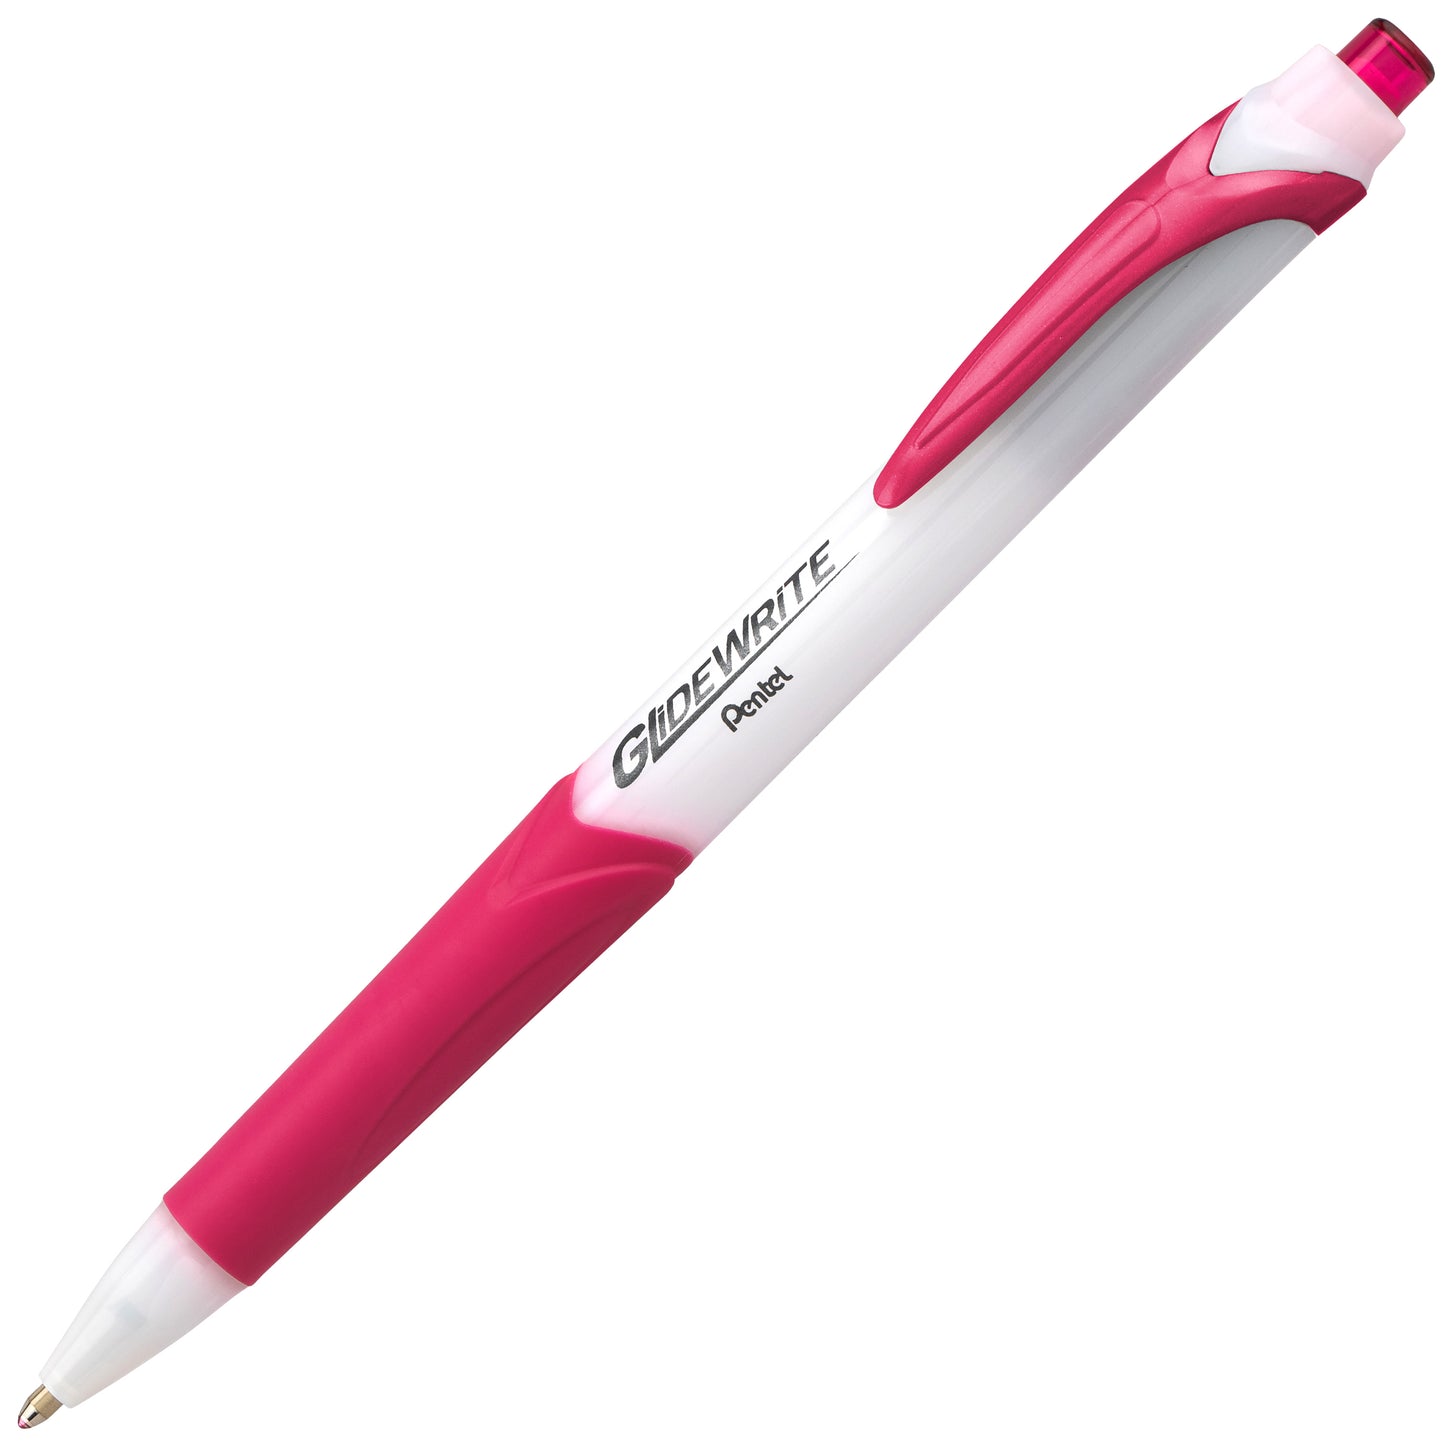 GlideWrite 2-in-1 Ballpoint Pen